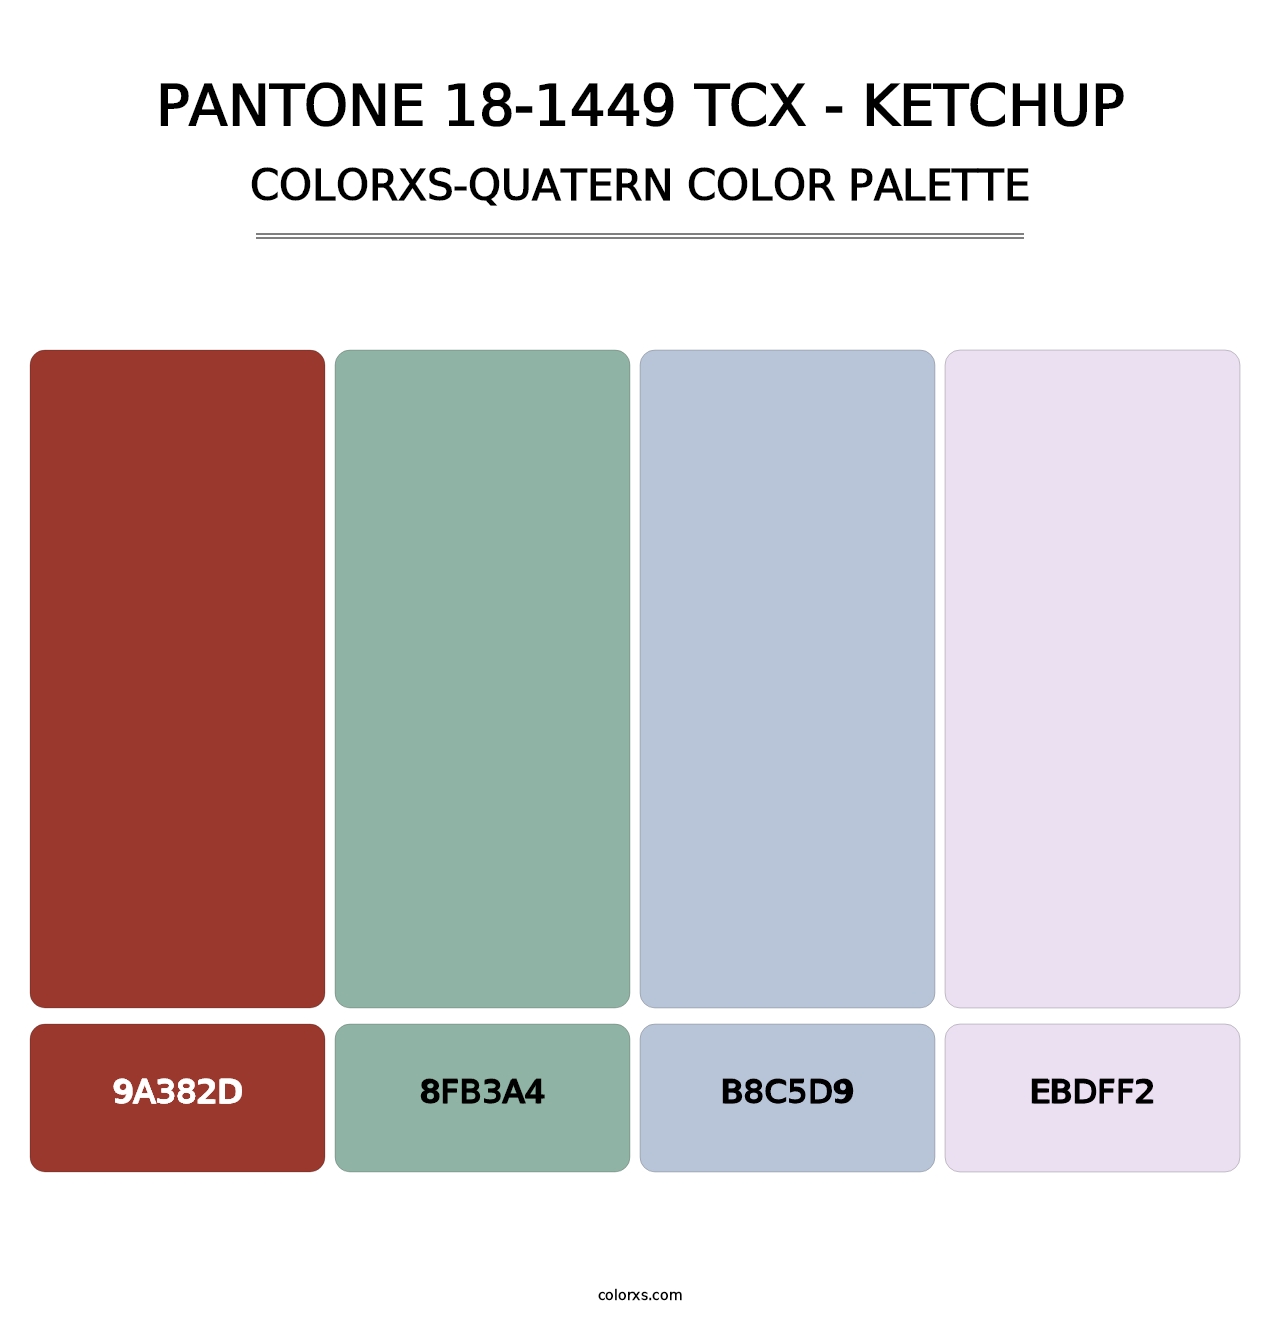 PANTONE 18-1449 TCX - Ketchup - Colorxs Quatern Palette